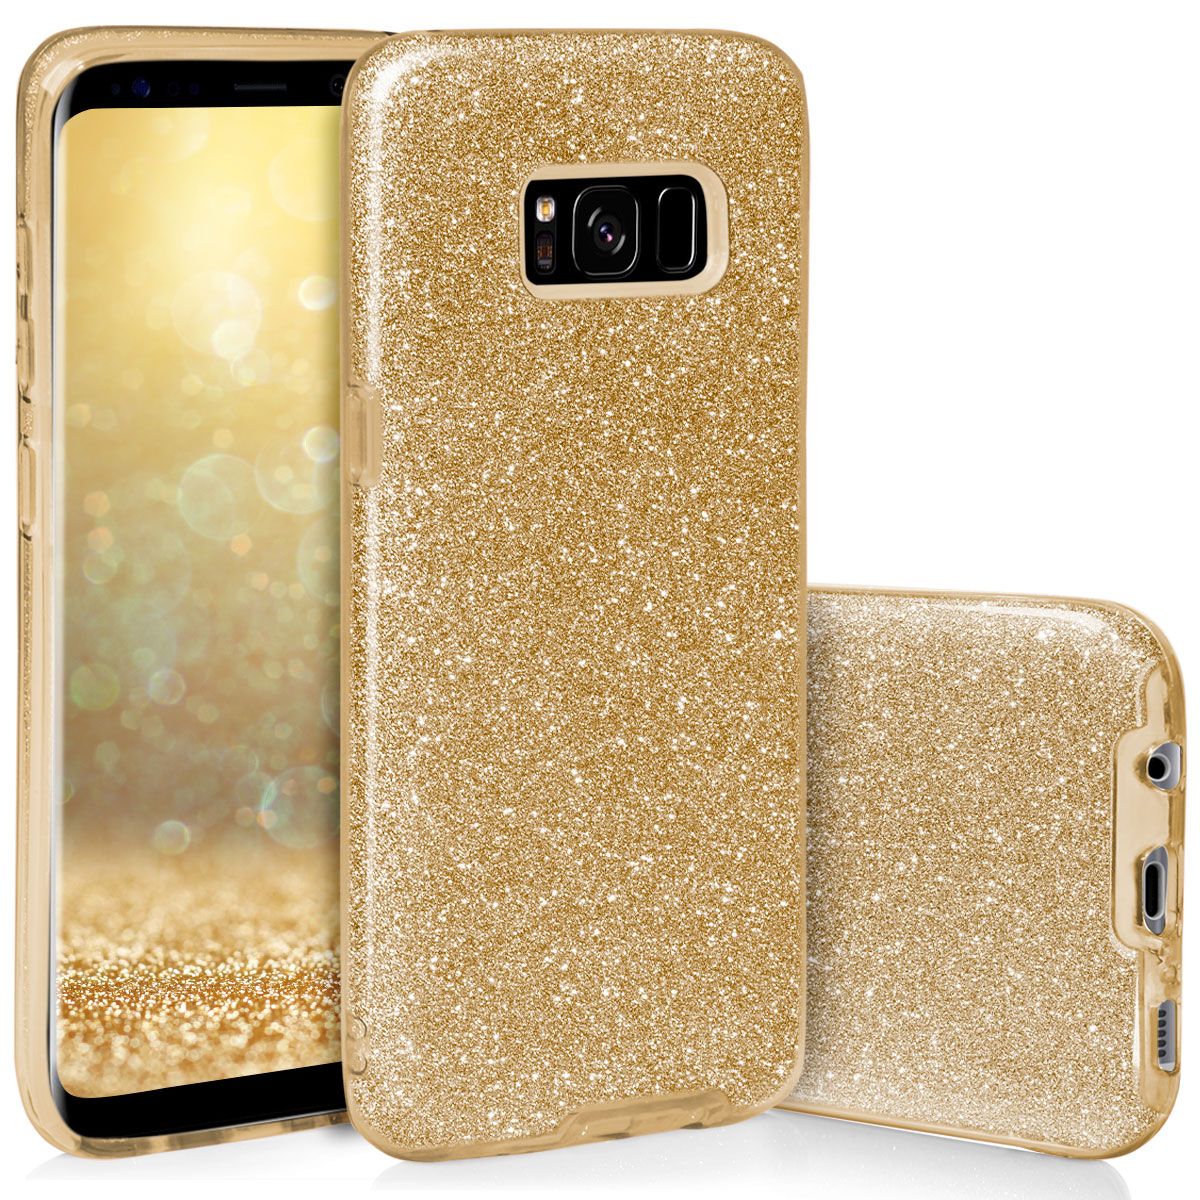 Pouzdro Blink Case pro Samsung G955 S8 PLUS zlaté